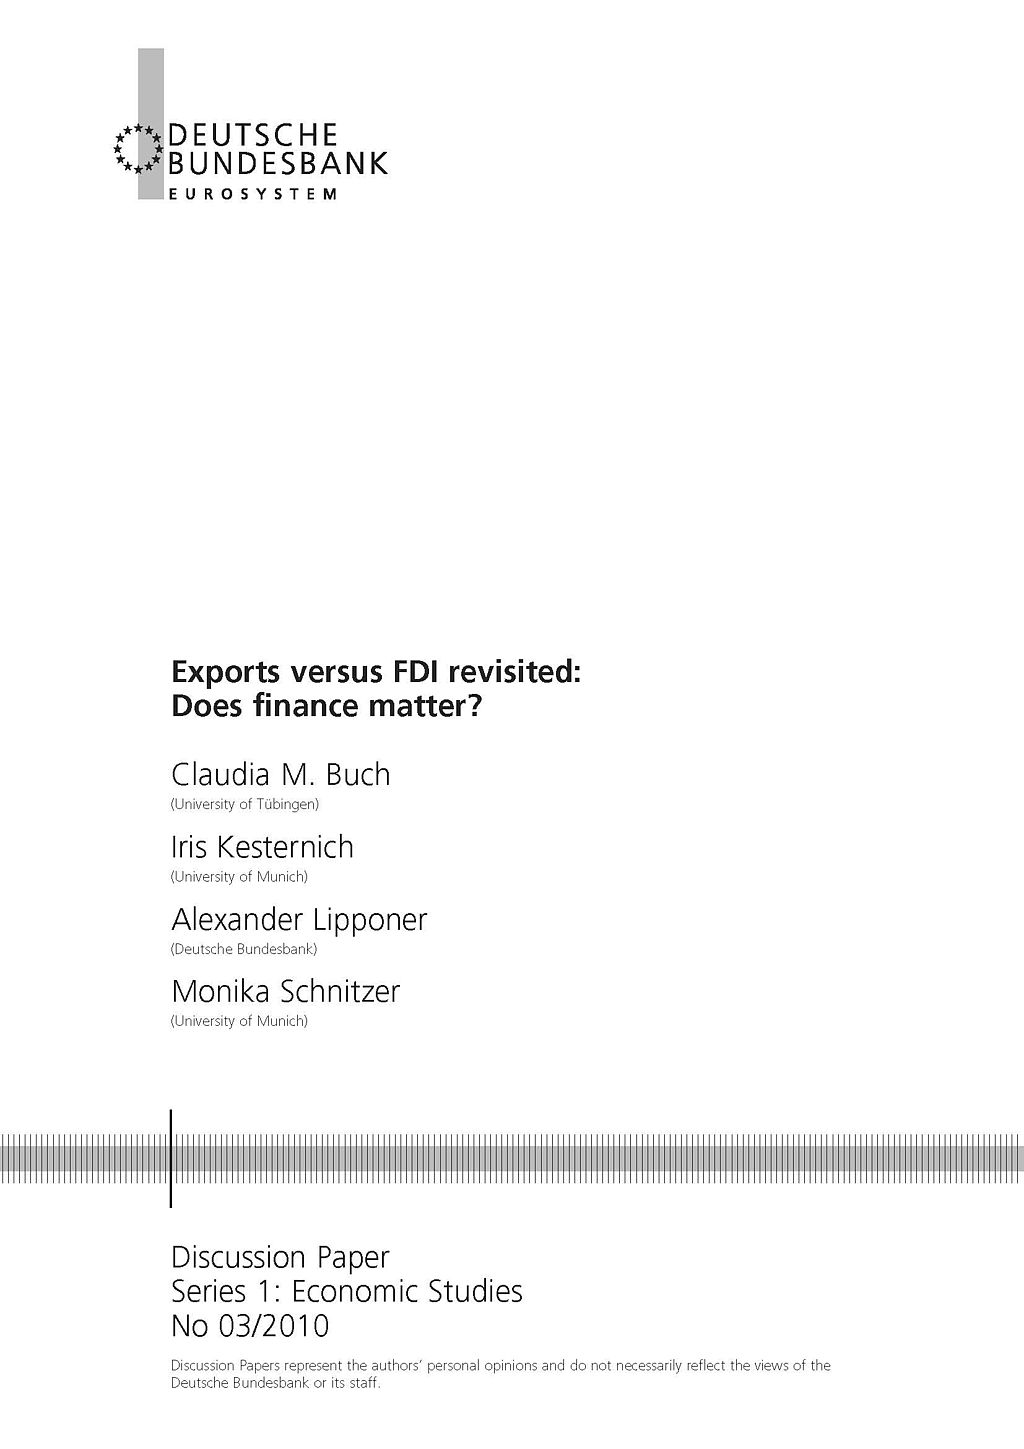 cover_Deutsche-Bundesbank-Discussion-Paper_2010-03.jpg